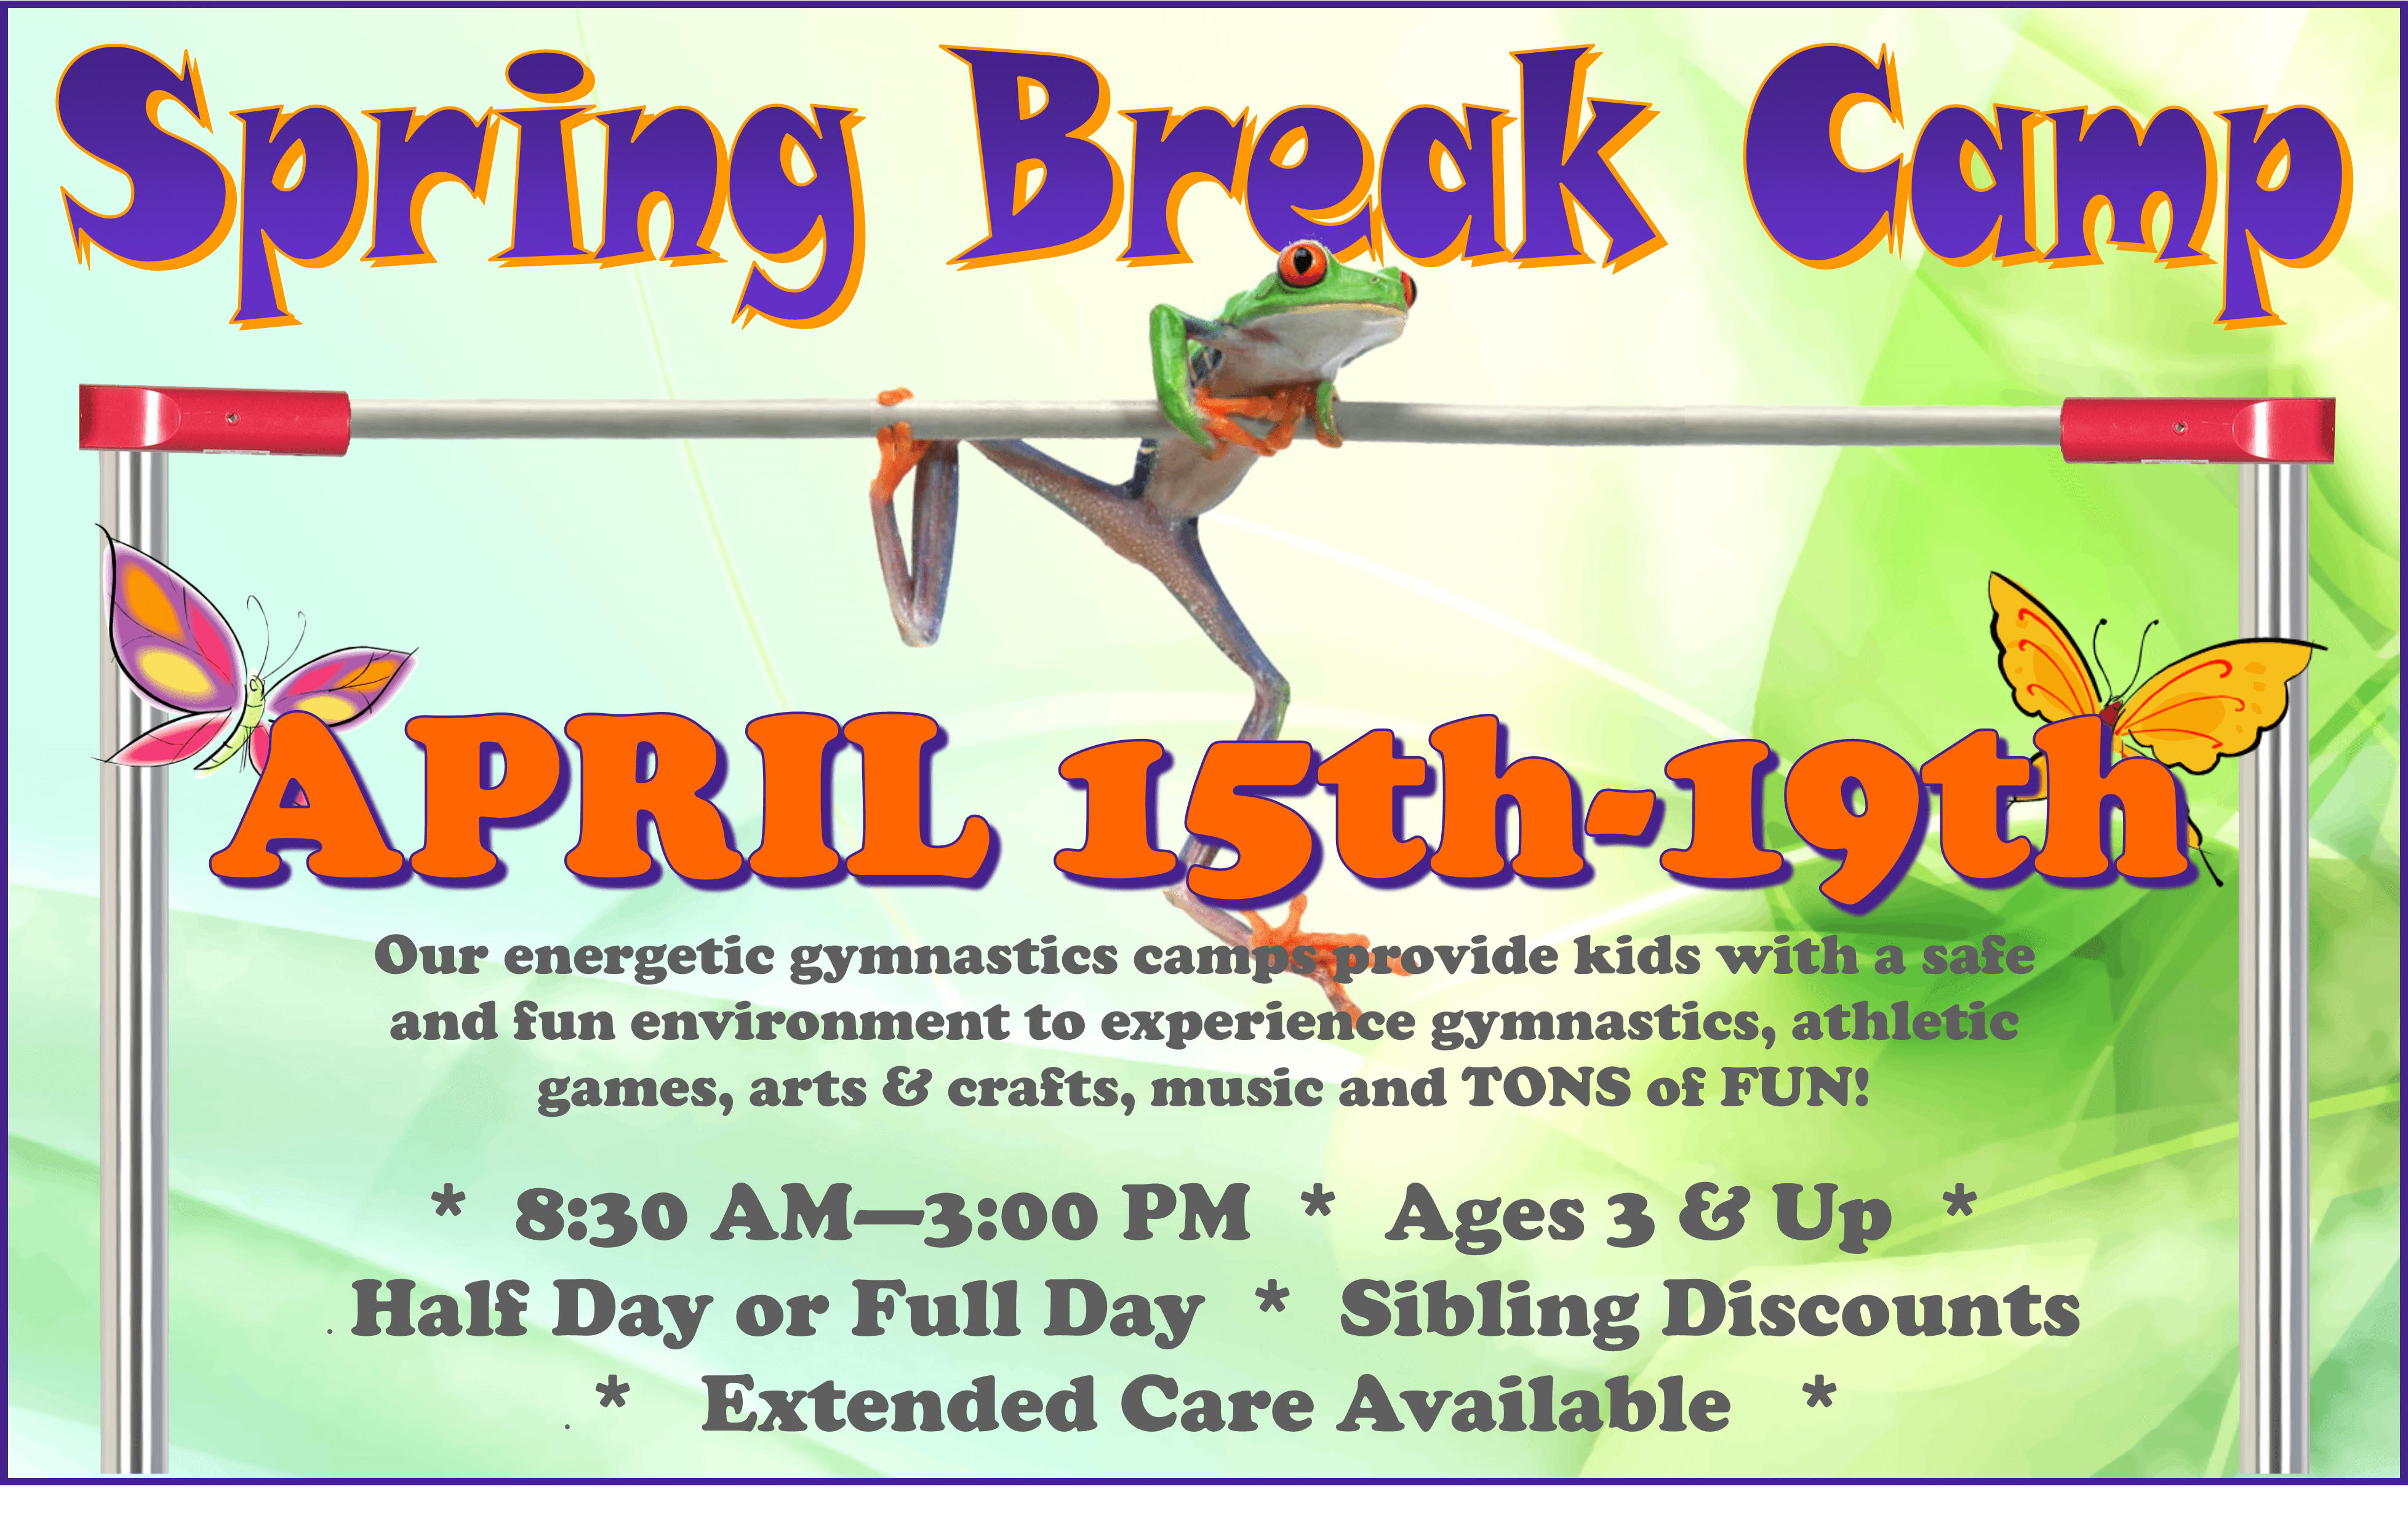 SCATS Spring Break Camp